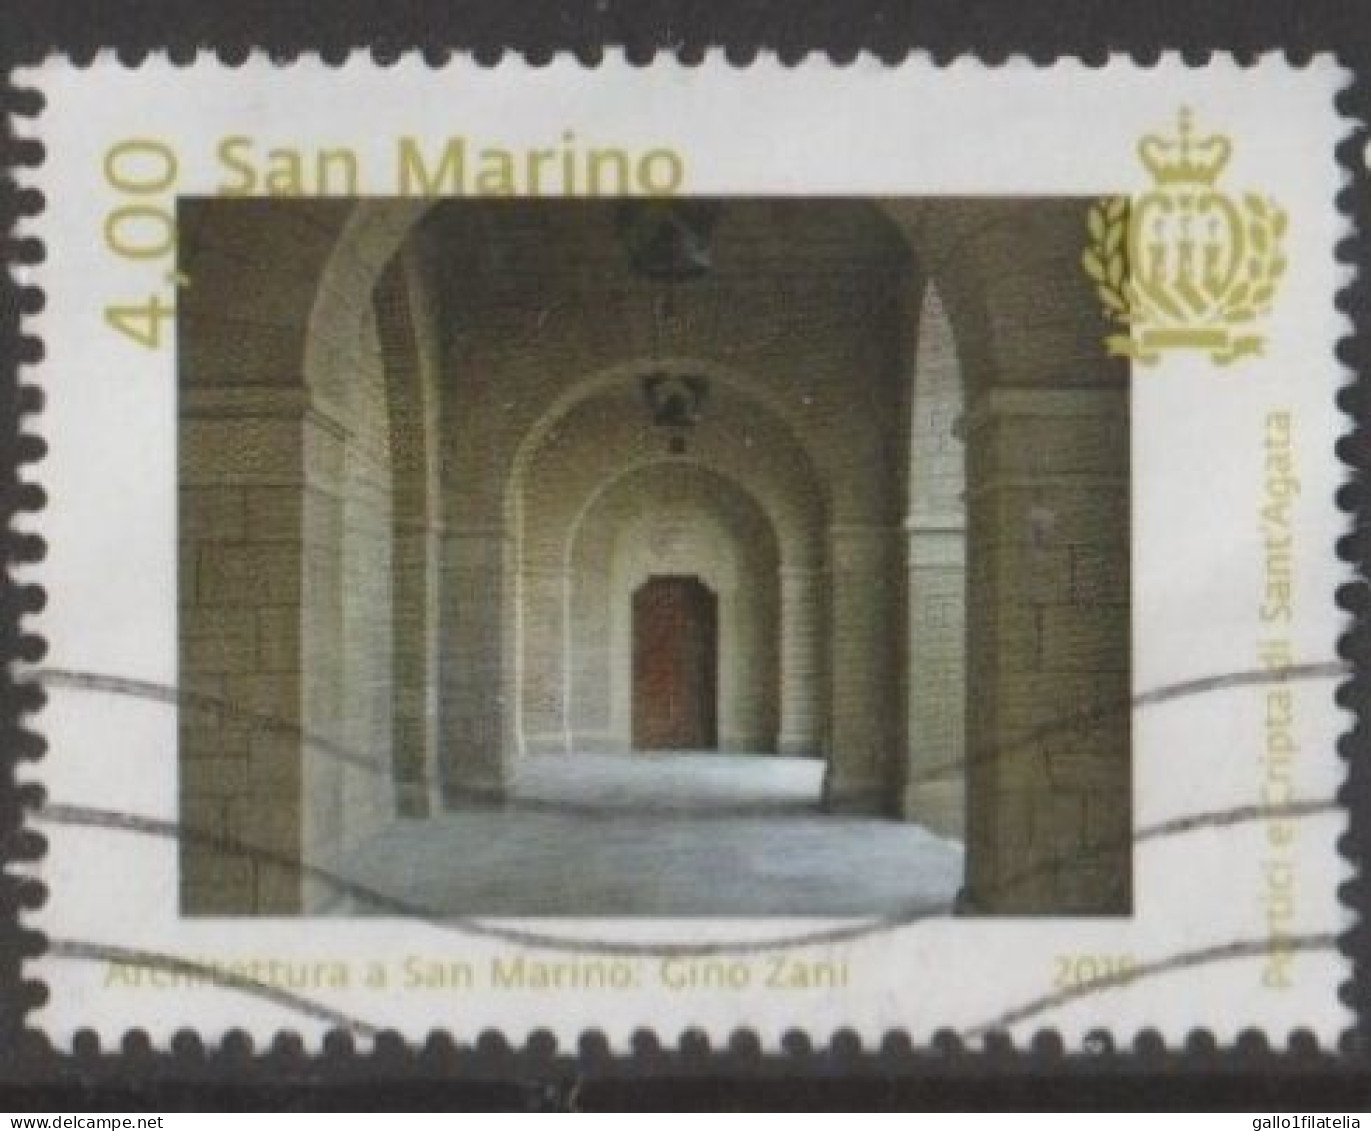 2015 - SAN MARINO - ARCHITETTURA A SAN MARINO / ARCHITECTURE IN SAN MARINO - USATO. - Usati